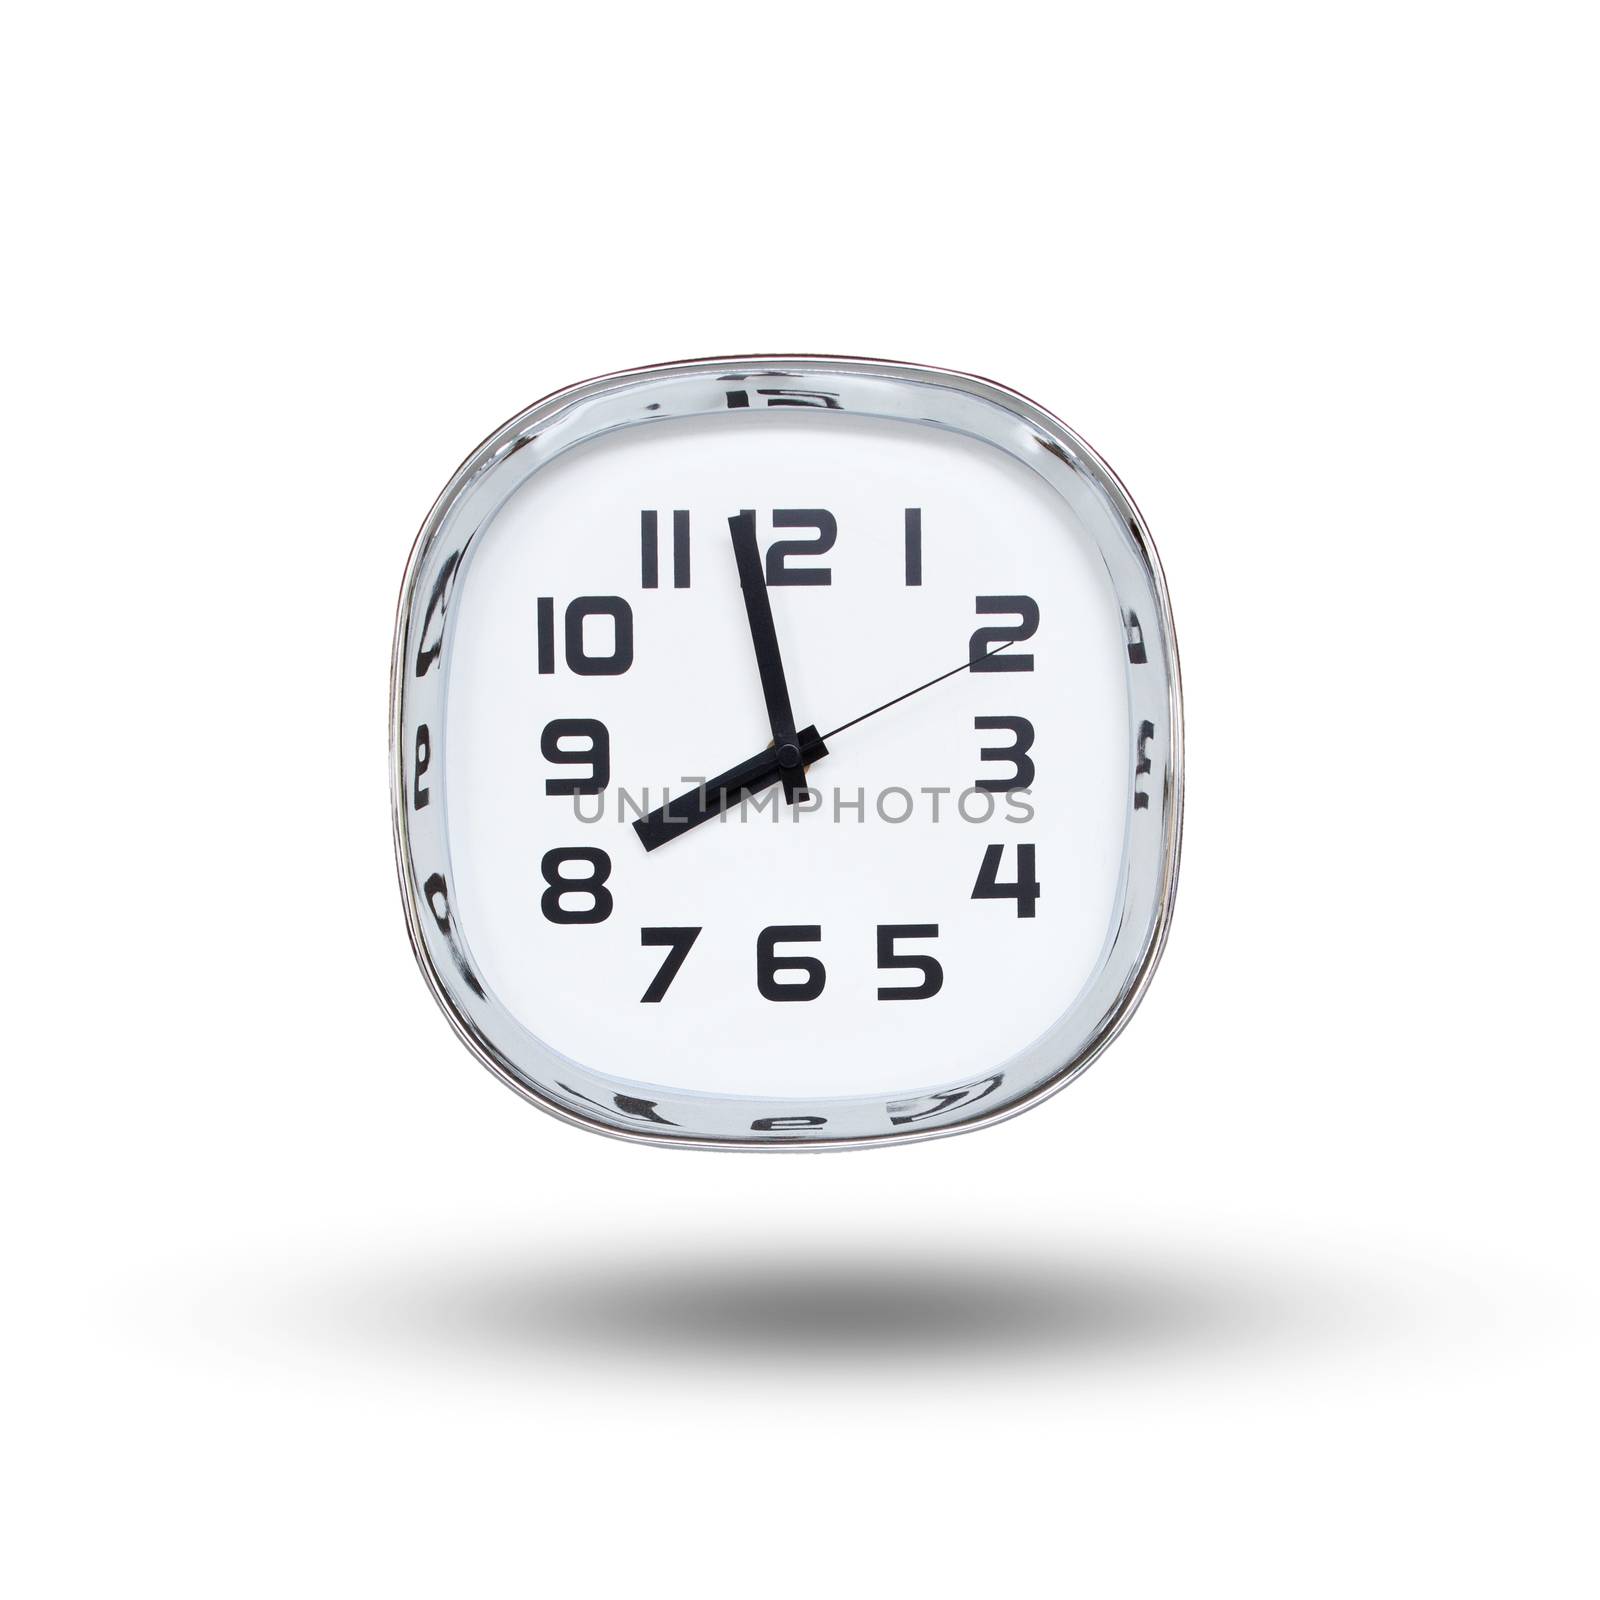 clock showing near eight o'clock